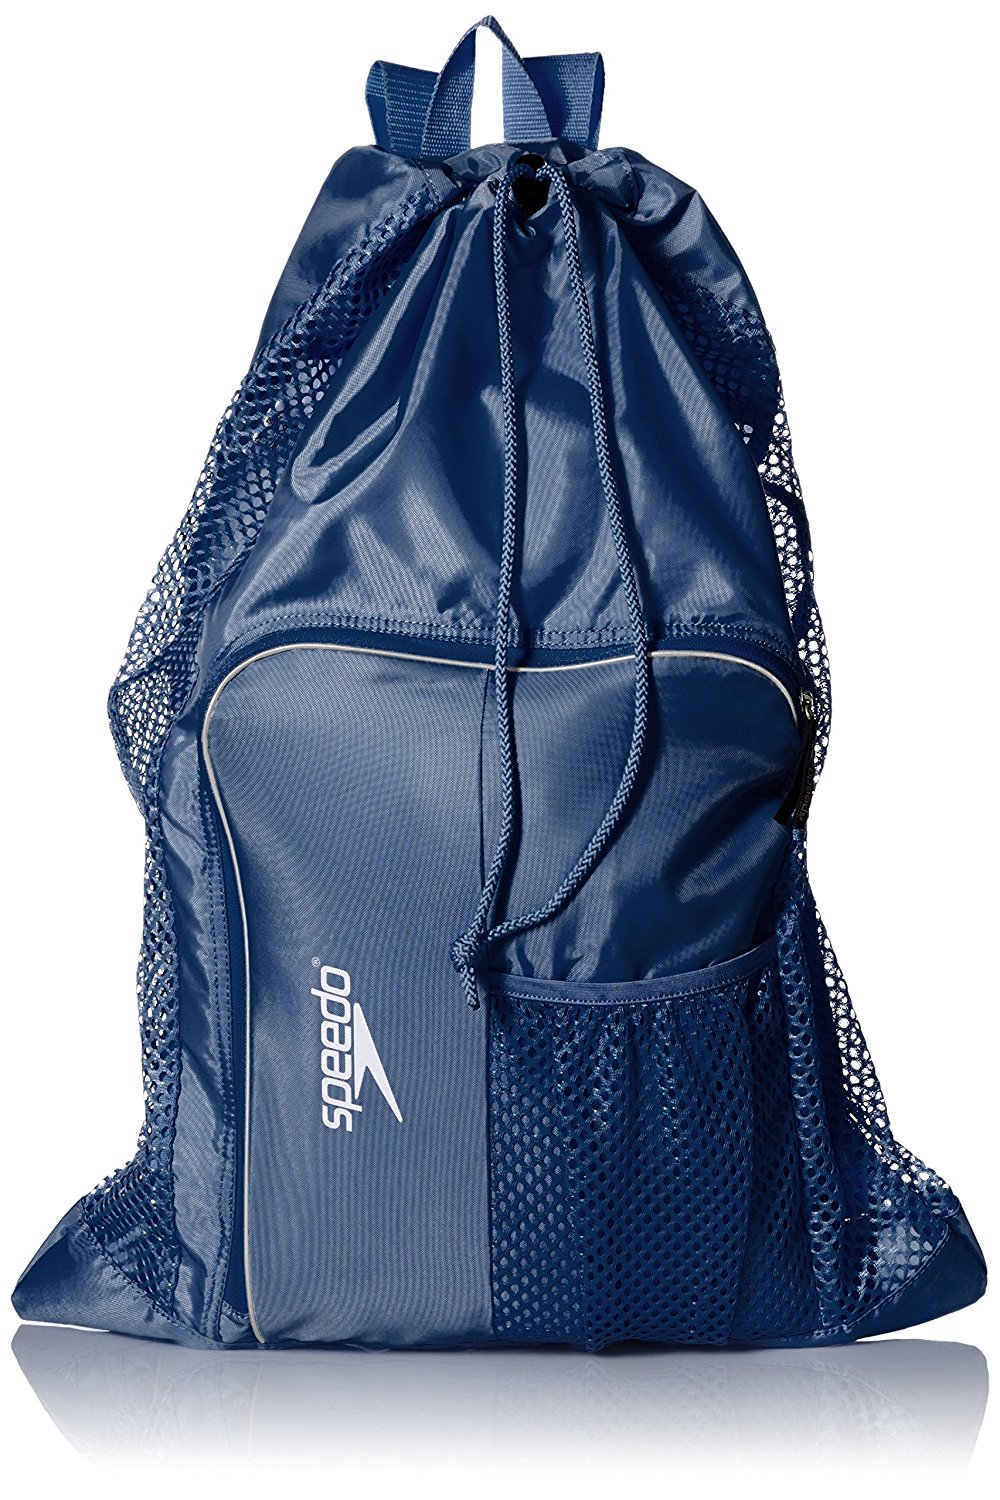 Speedo Swim Deluxe Ventilator Mesh Equipment Pool Gear Swimming Bag - image 1 of 4